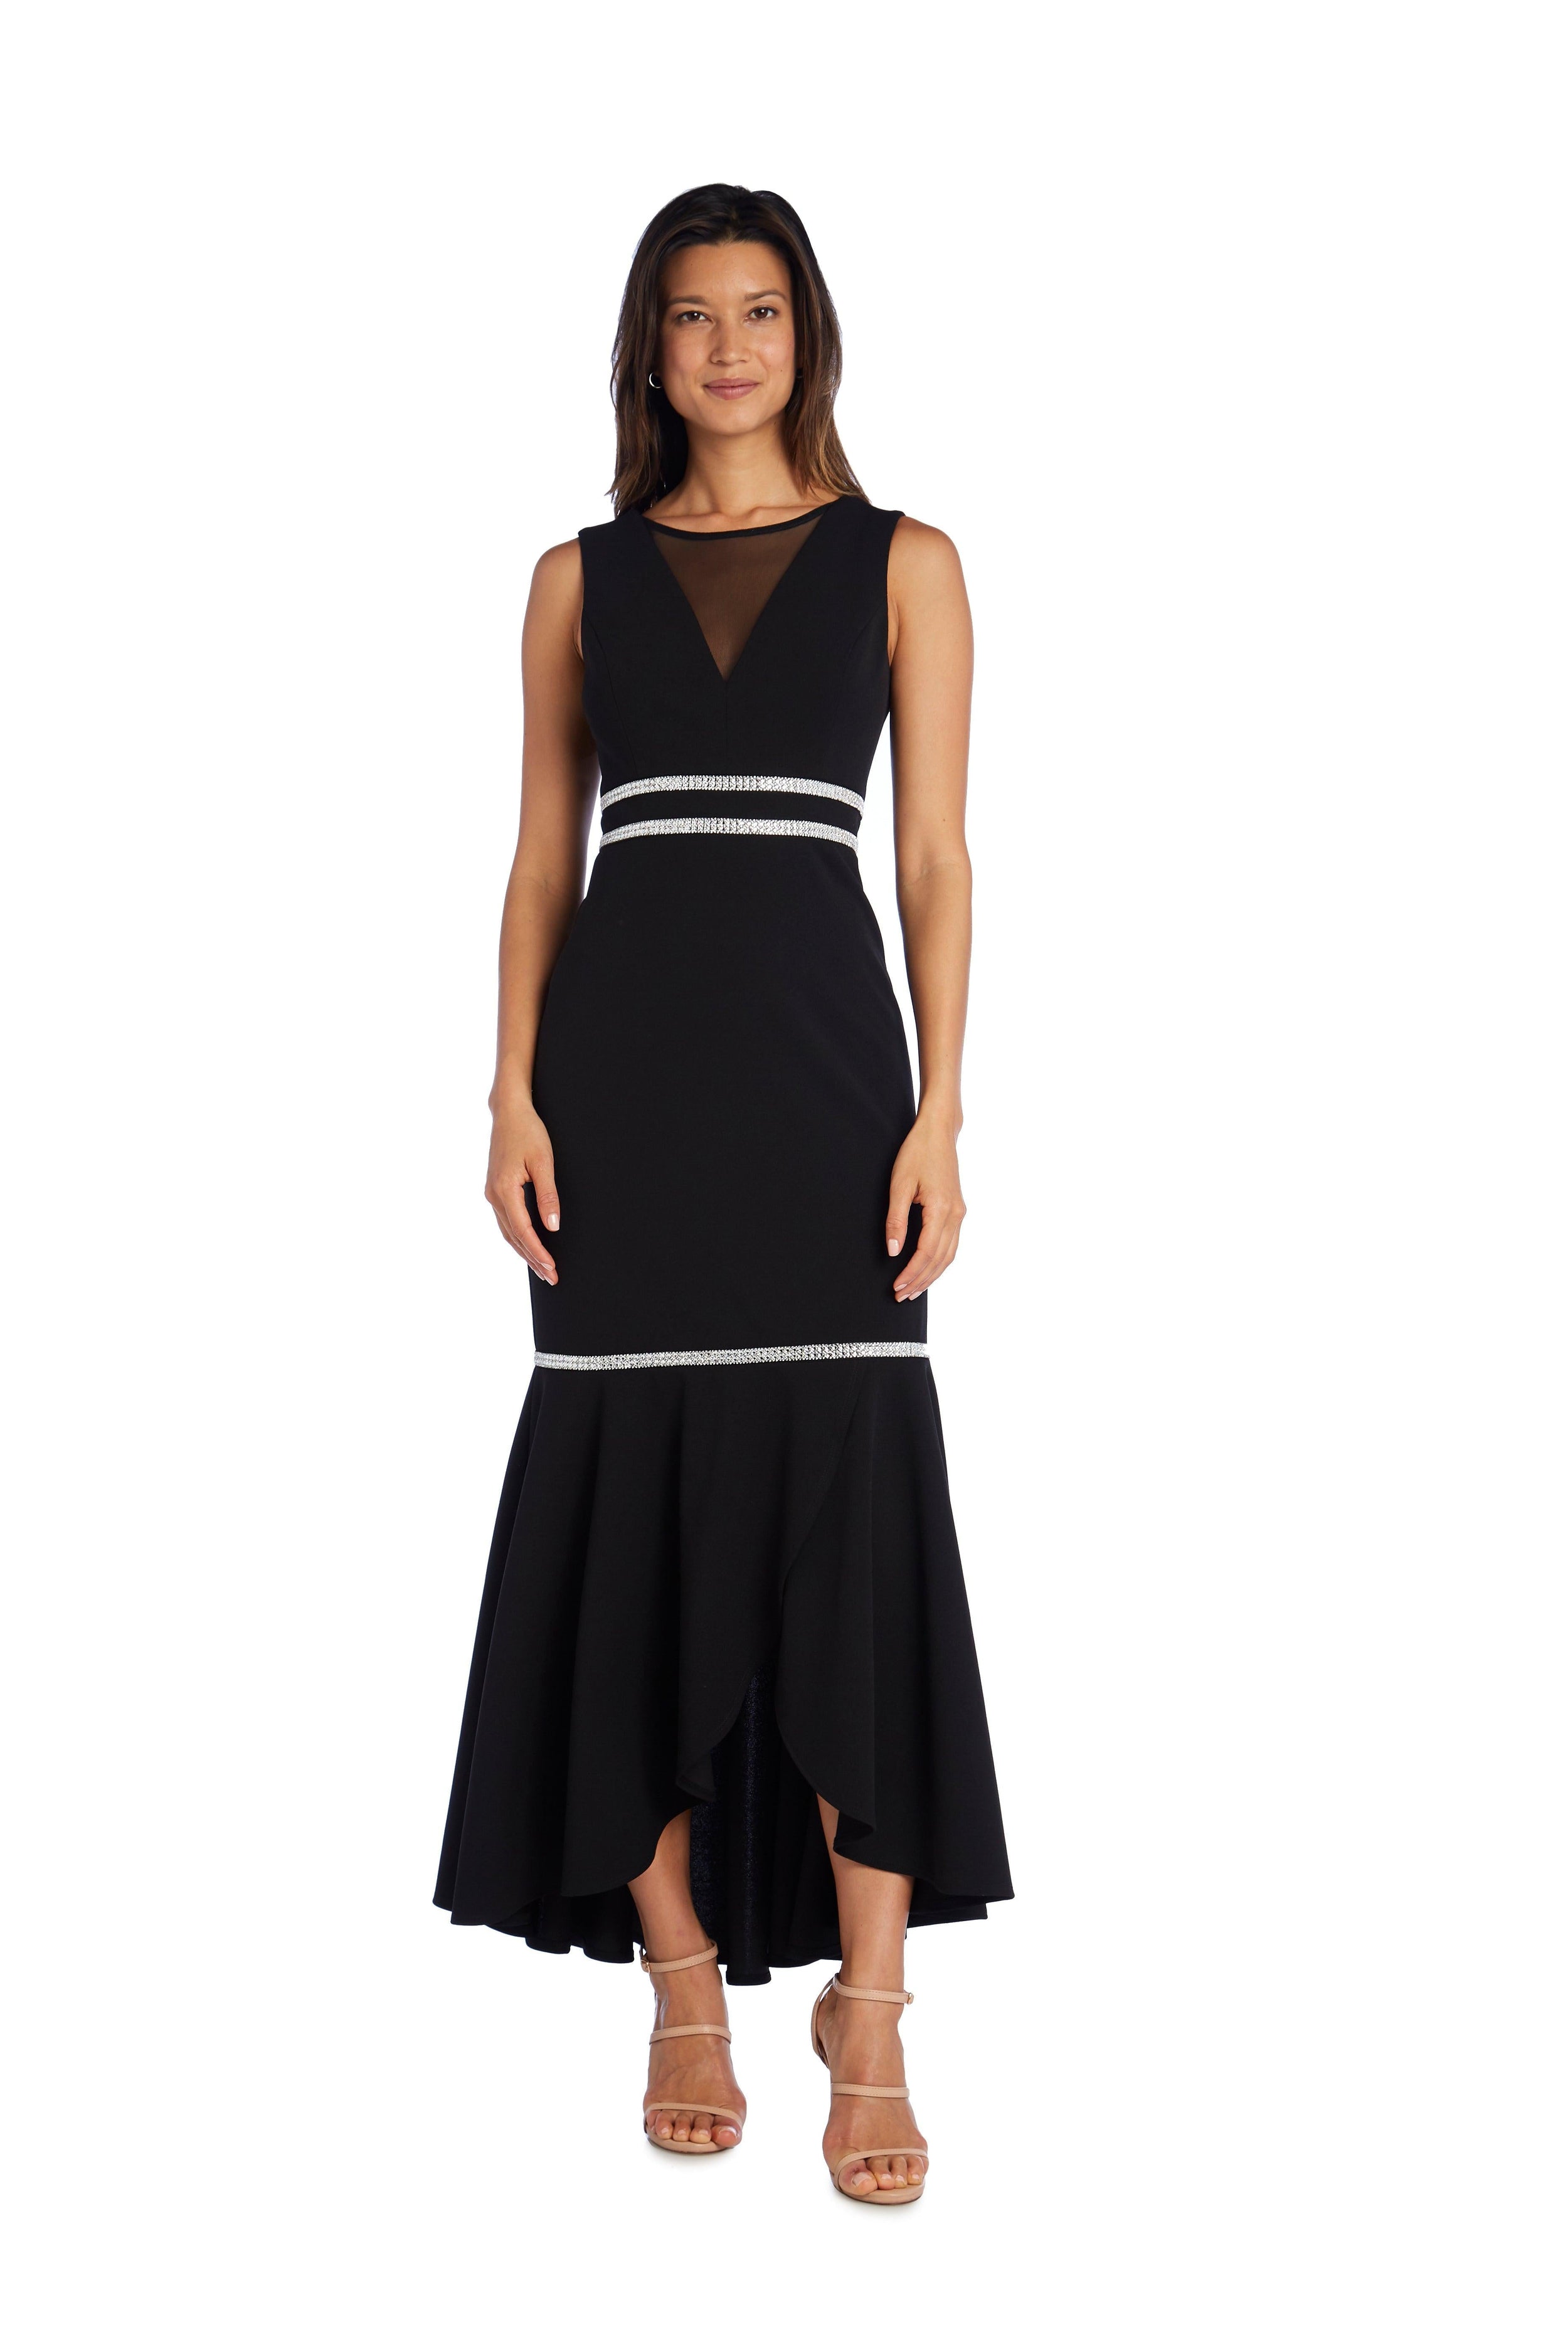 R&M Richards High Low Fishtail Skirt Evening Dress Sale - The Dress Outlet